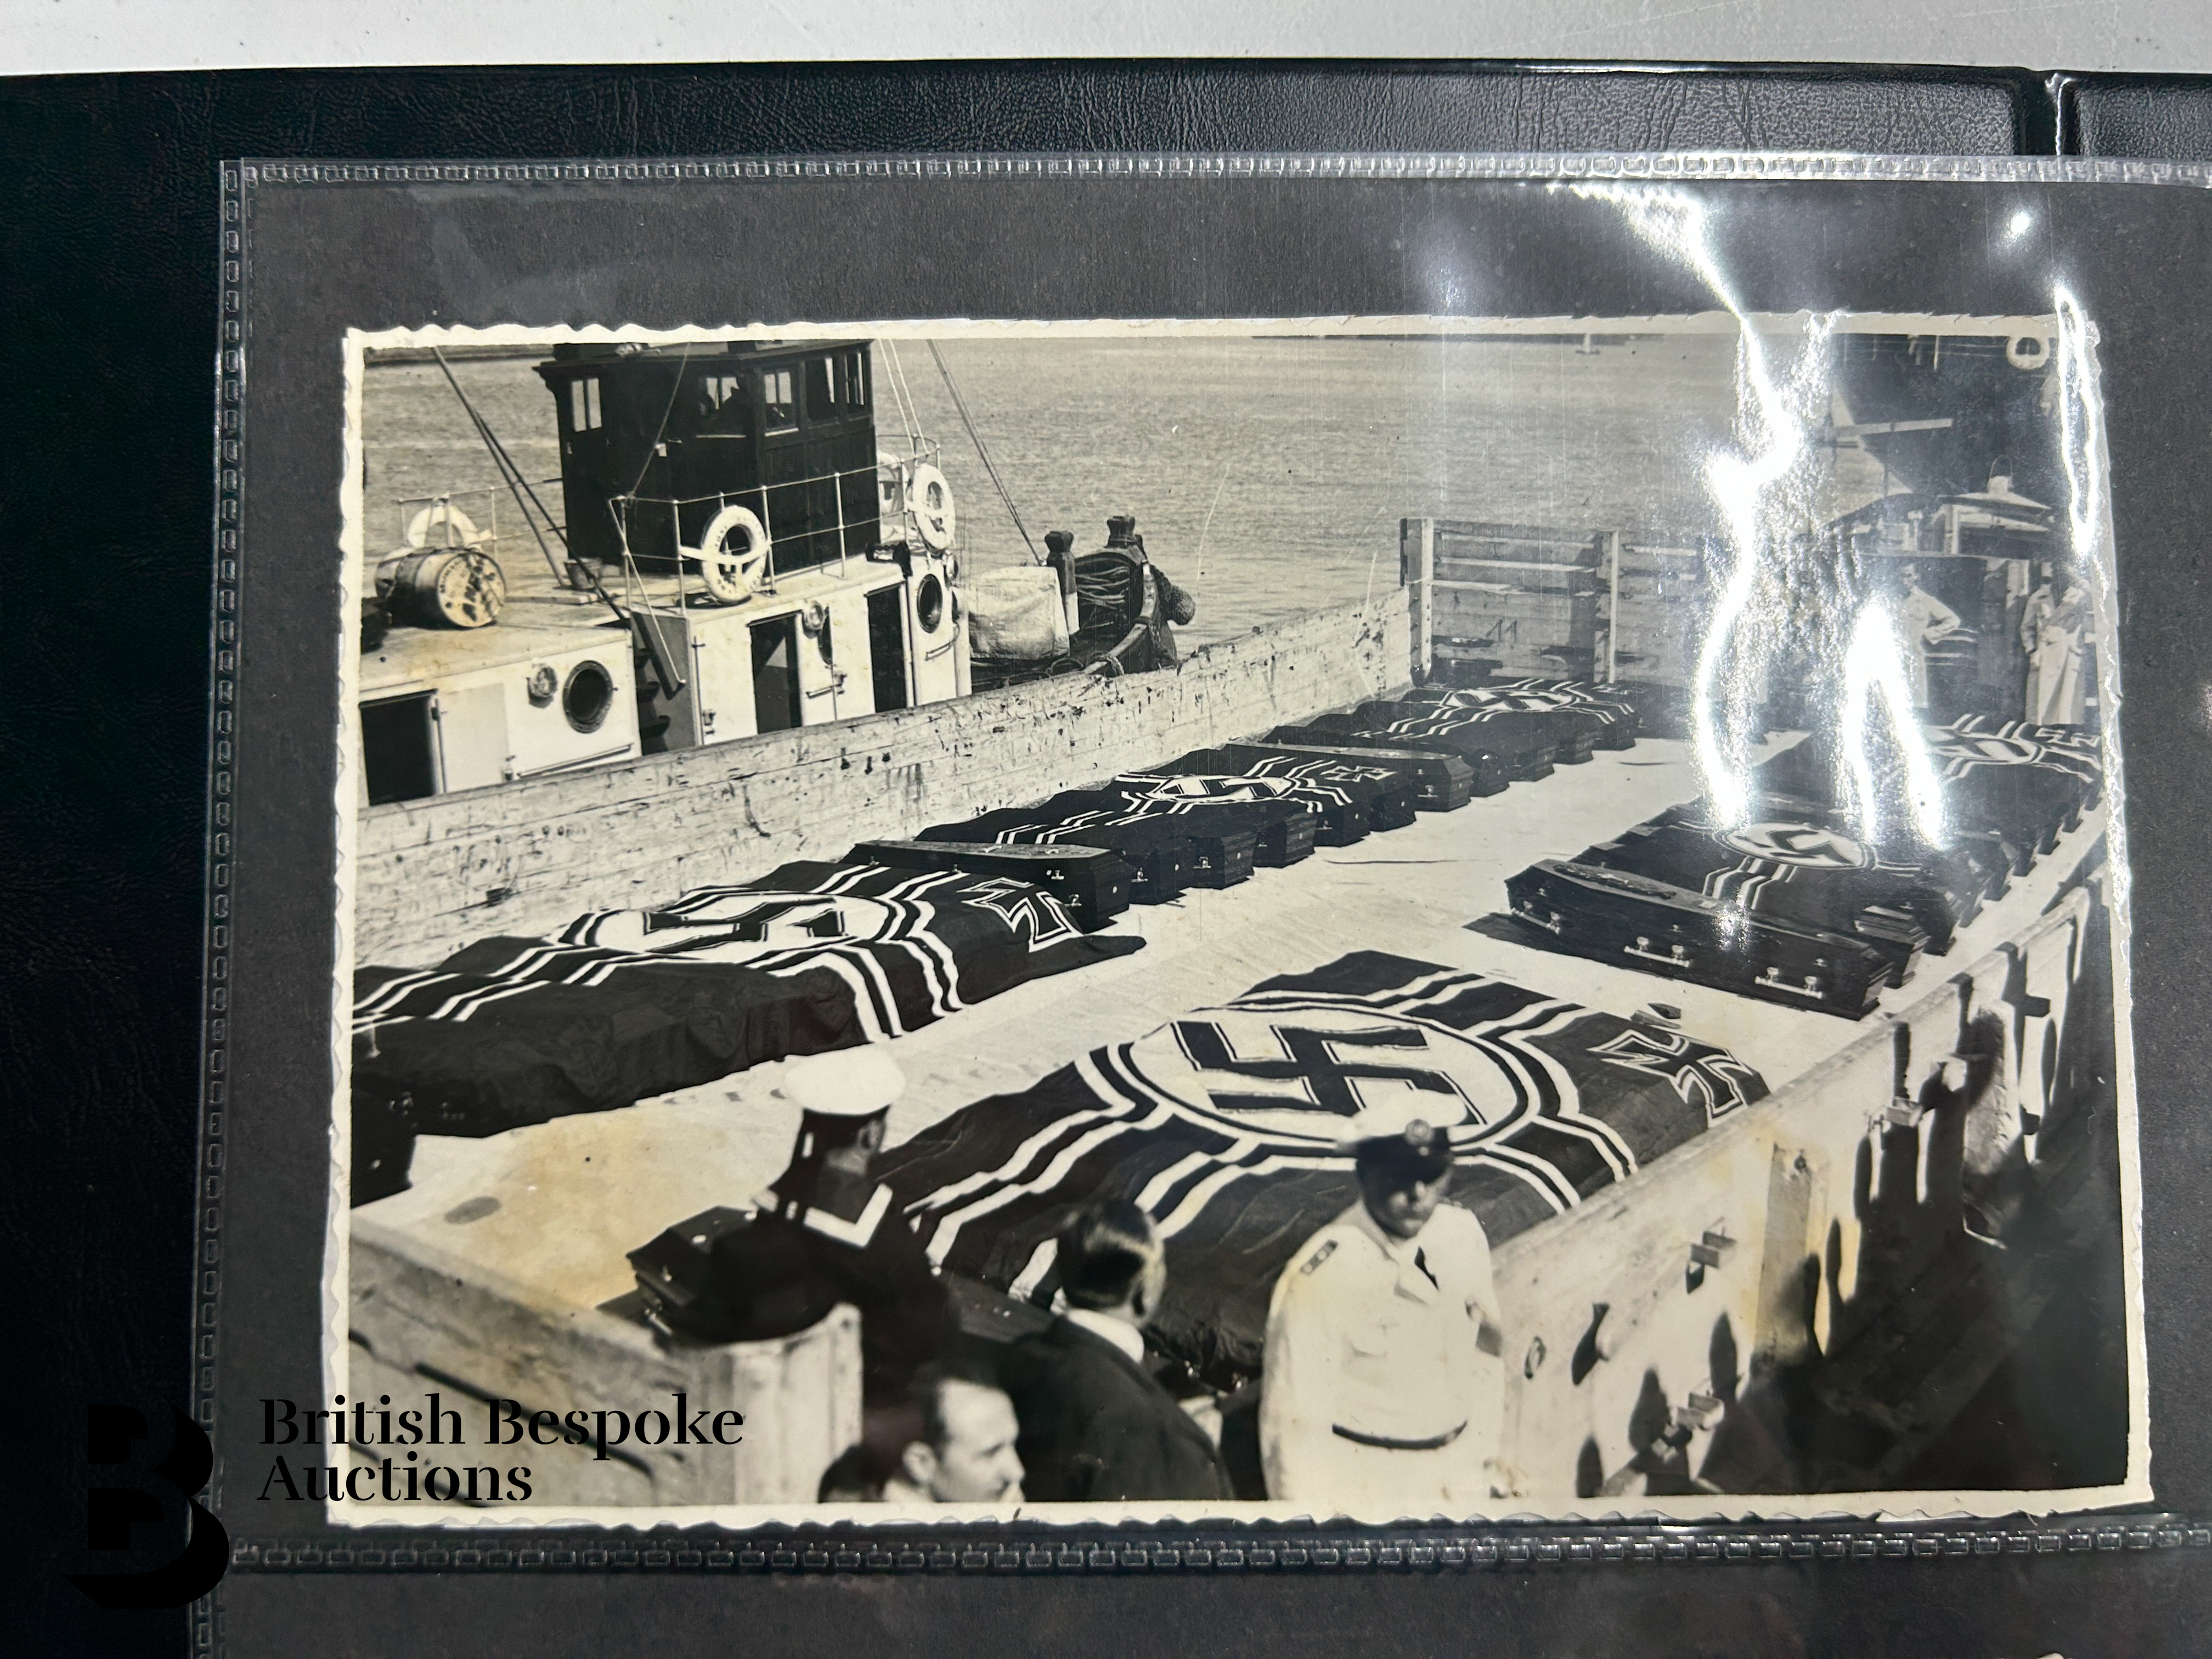 Graf Spee (Pocket Battleship) Interest, incl. Photographs, Documents, Miscellanea - Image 50 of 126